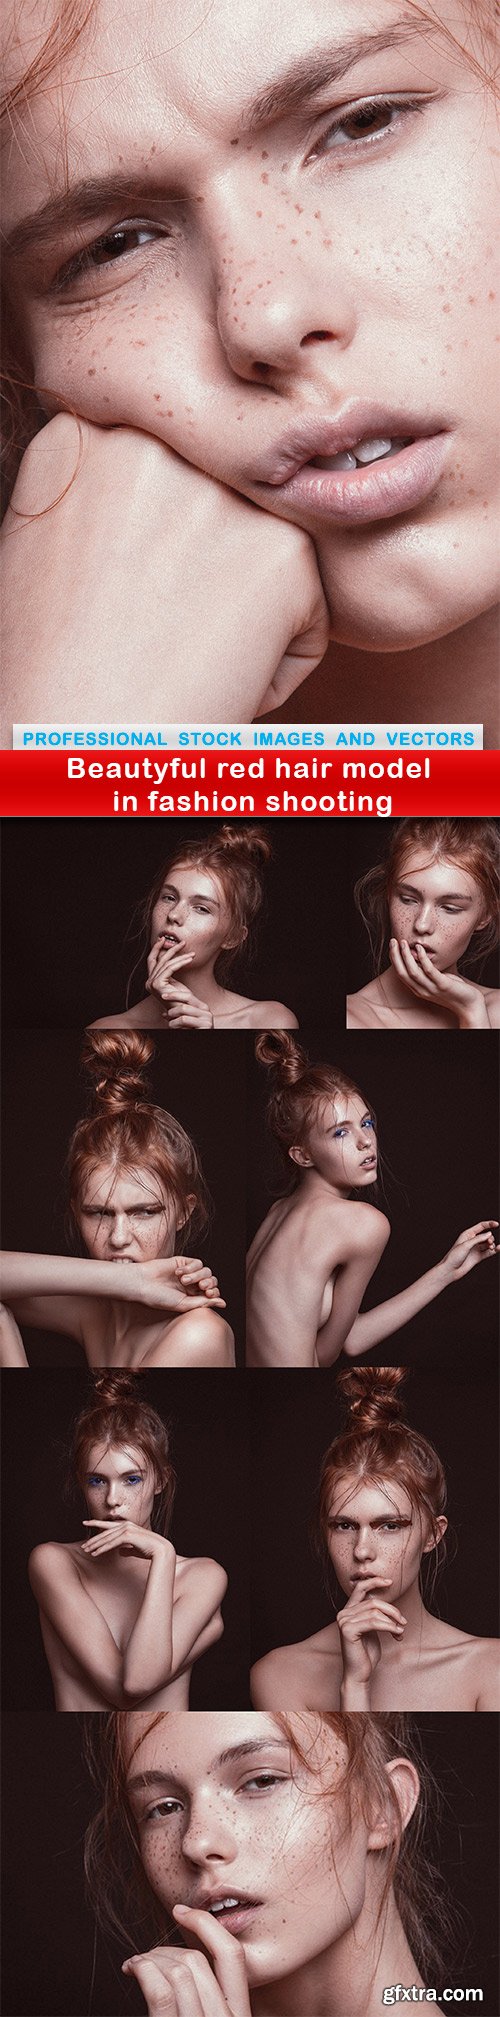 Beautyful red hair model in fashion shooting - 8 UHQ JPEG